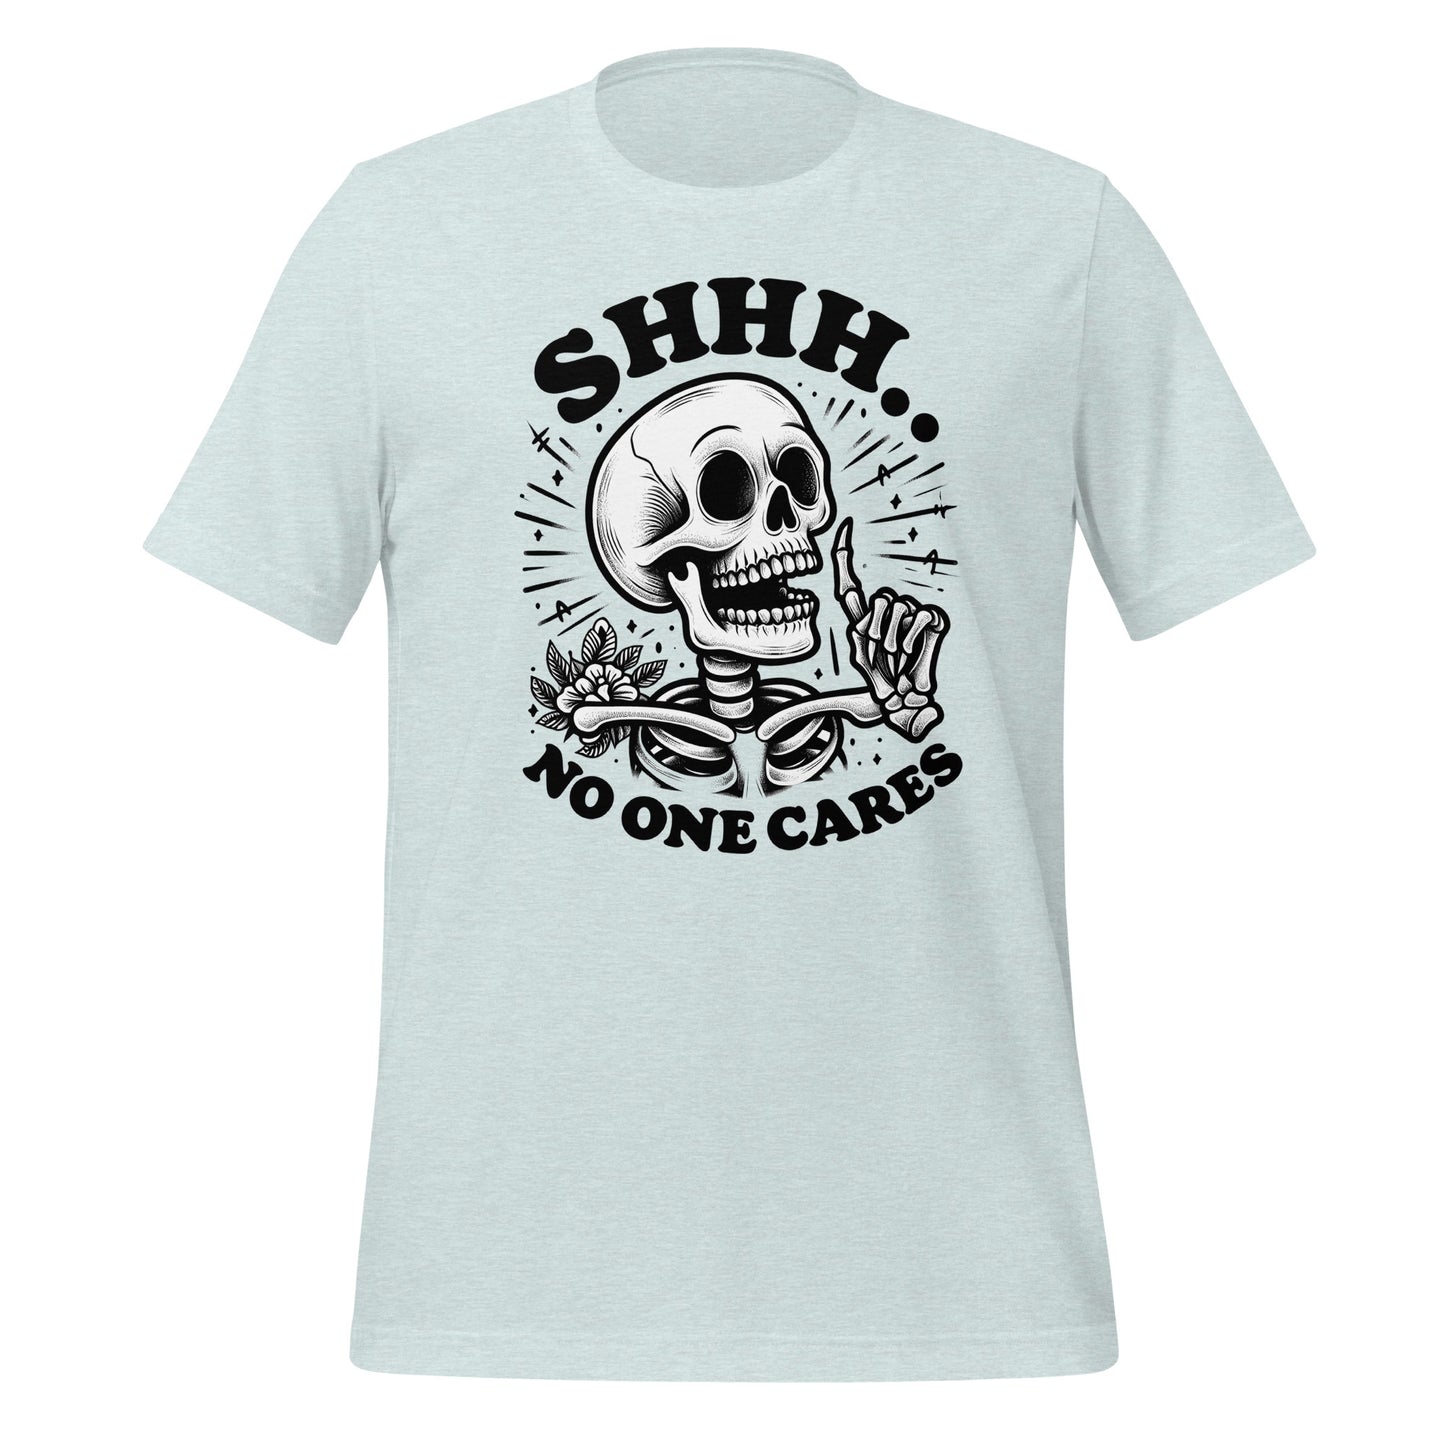 Shhh No One Cares Skeleton TShirt